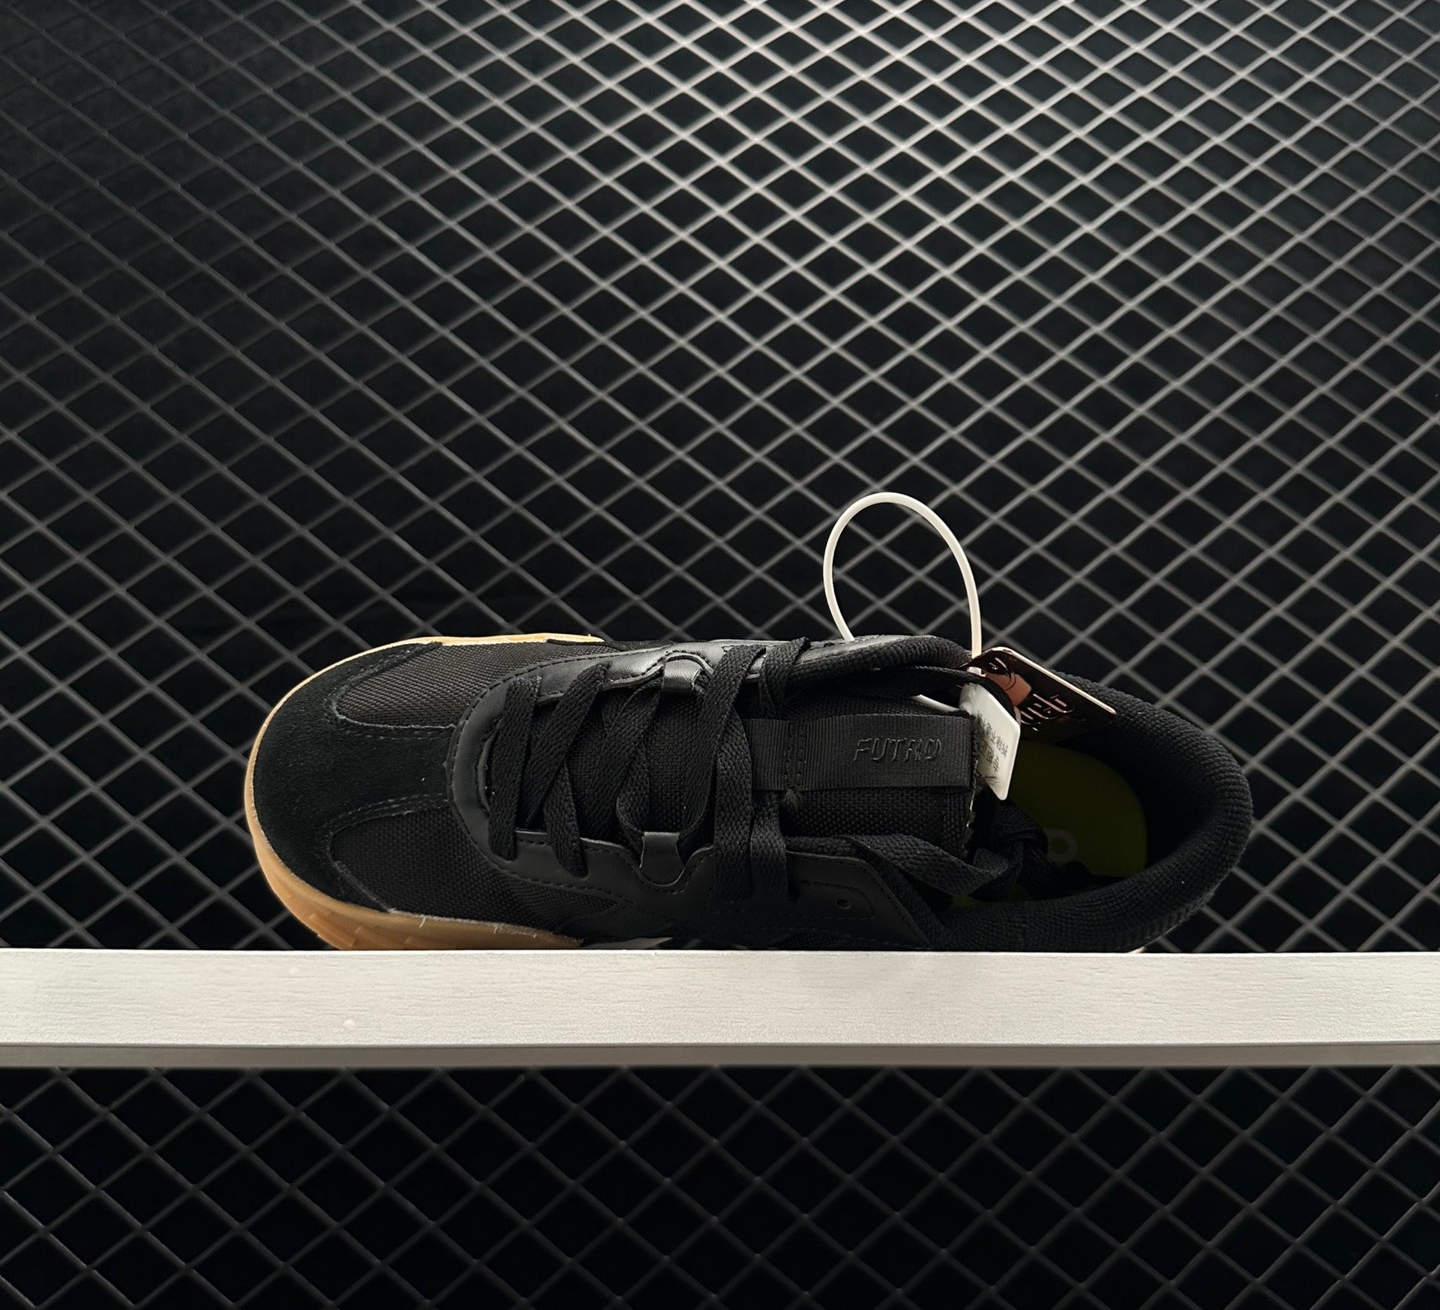 Adidas Neo Futro Mixr FM 'Black Gum' GY4724 - Stylish Men's Sneakers